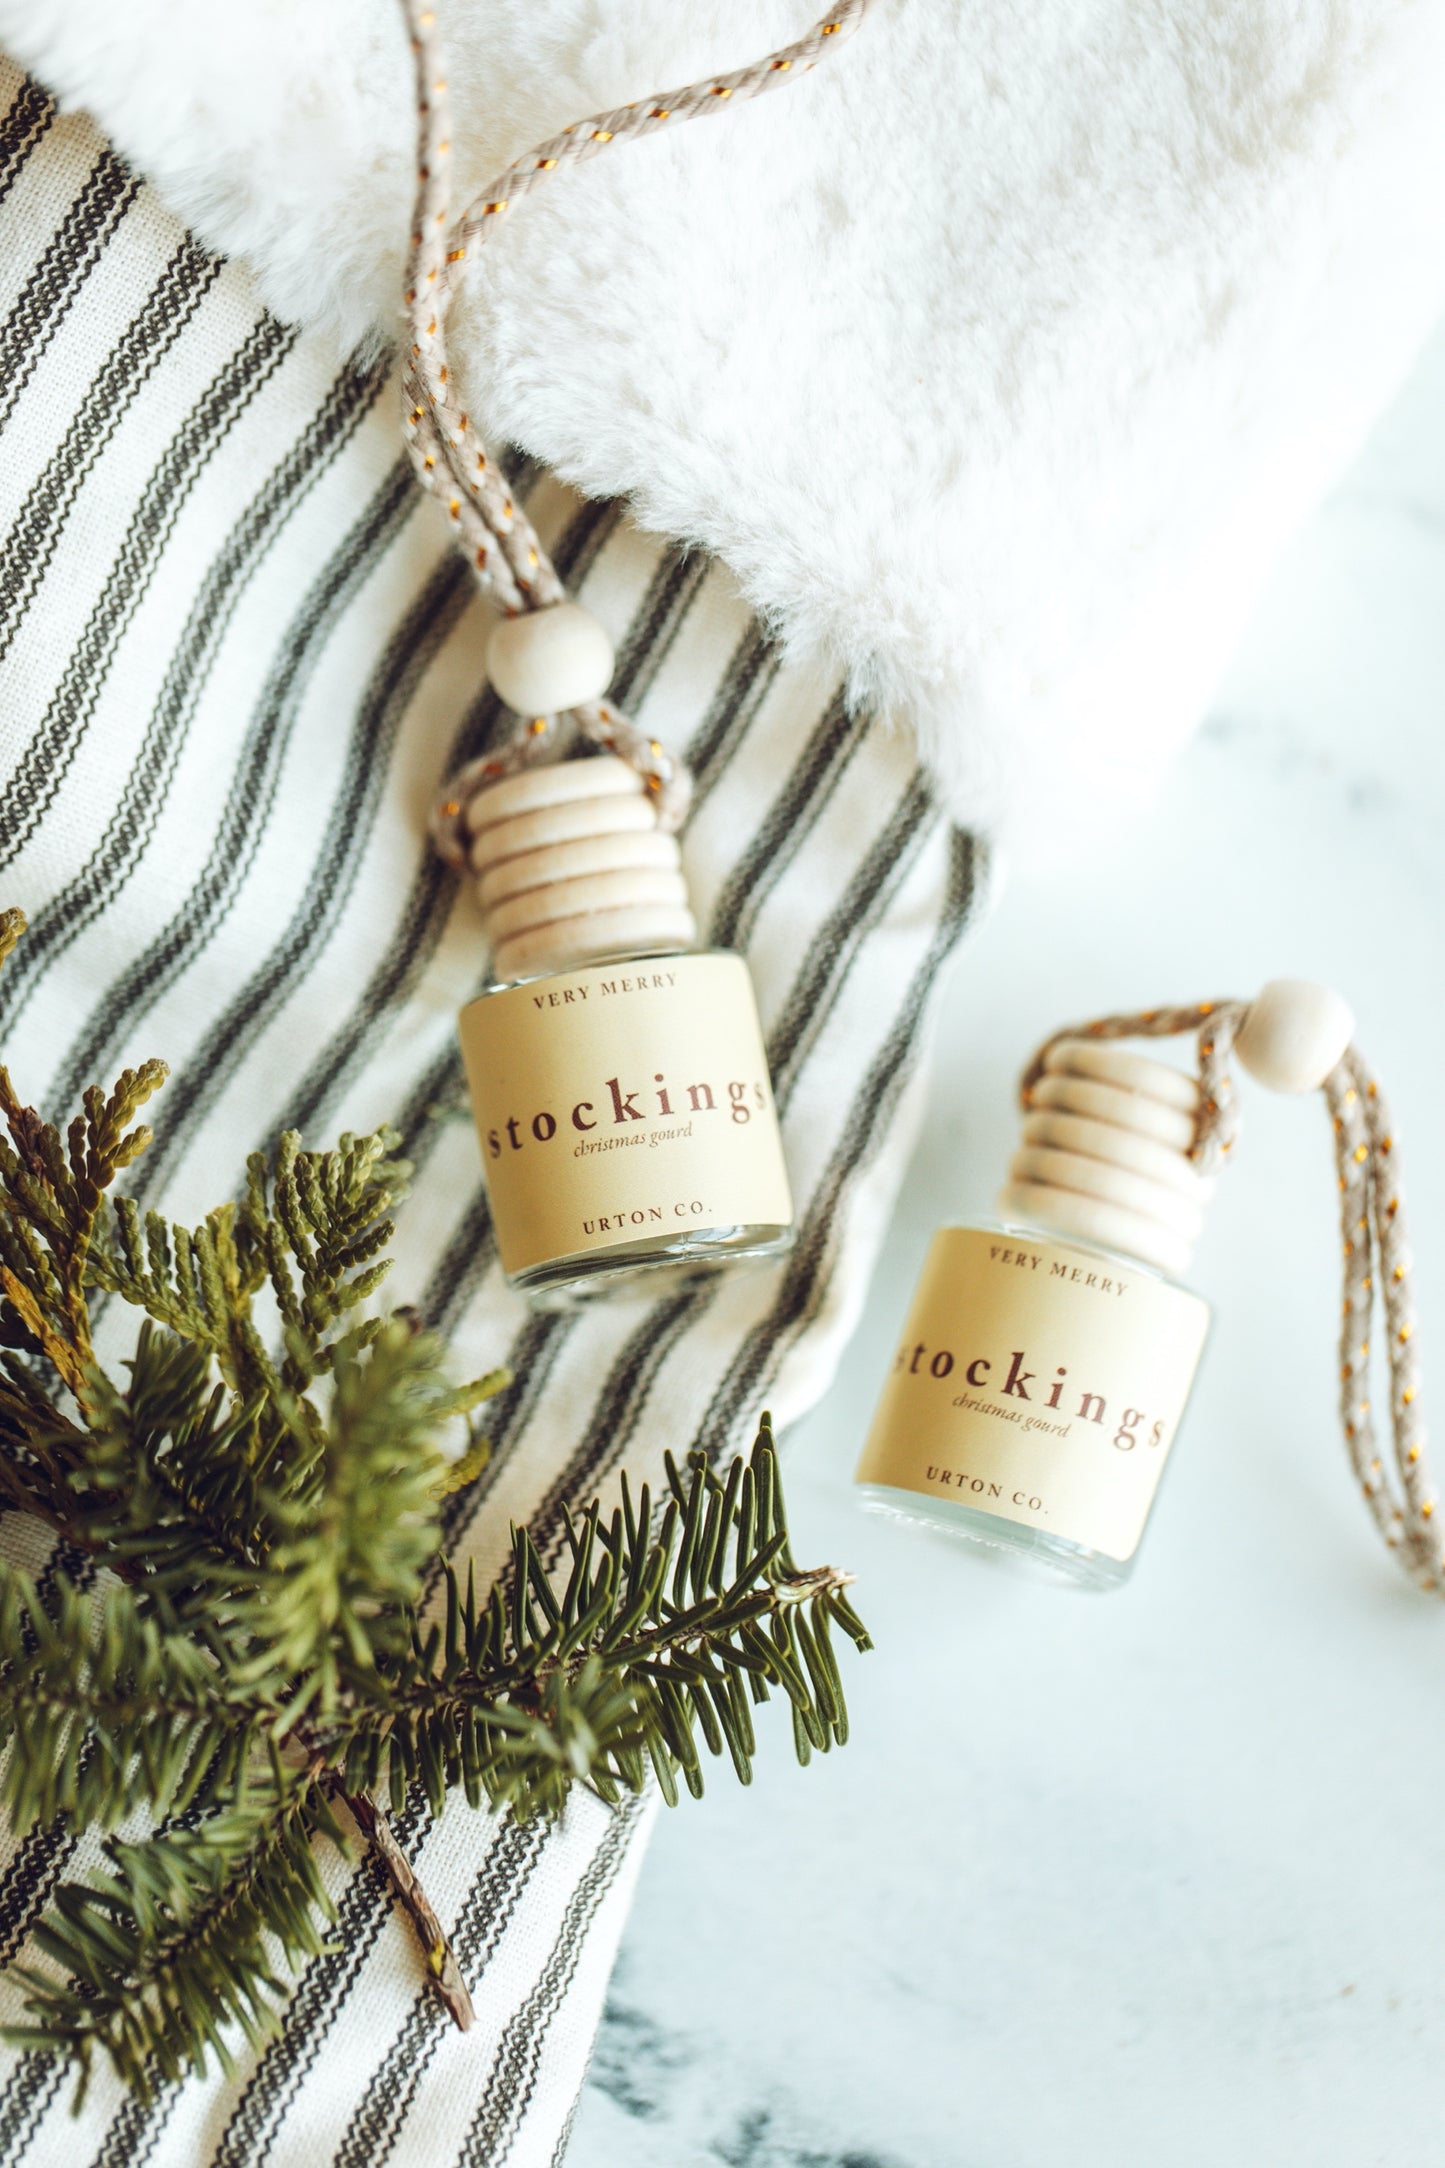 Stockings Essential Oil Blend - White Christmas Pumpkin Aromatherapy